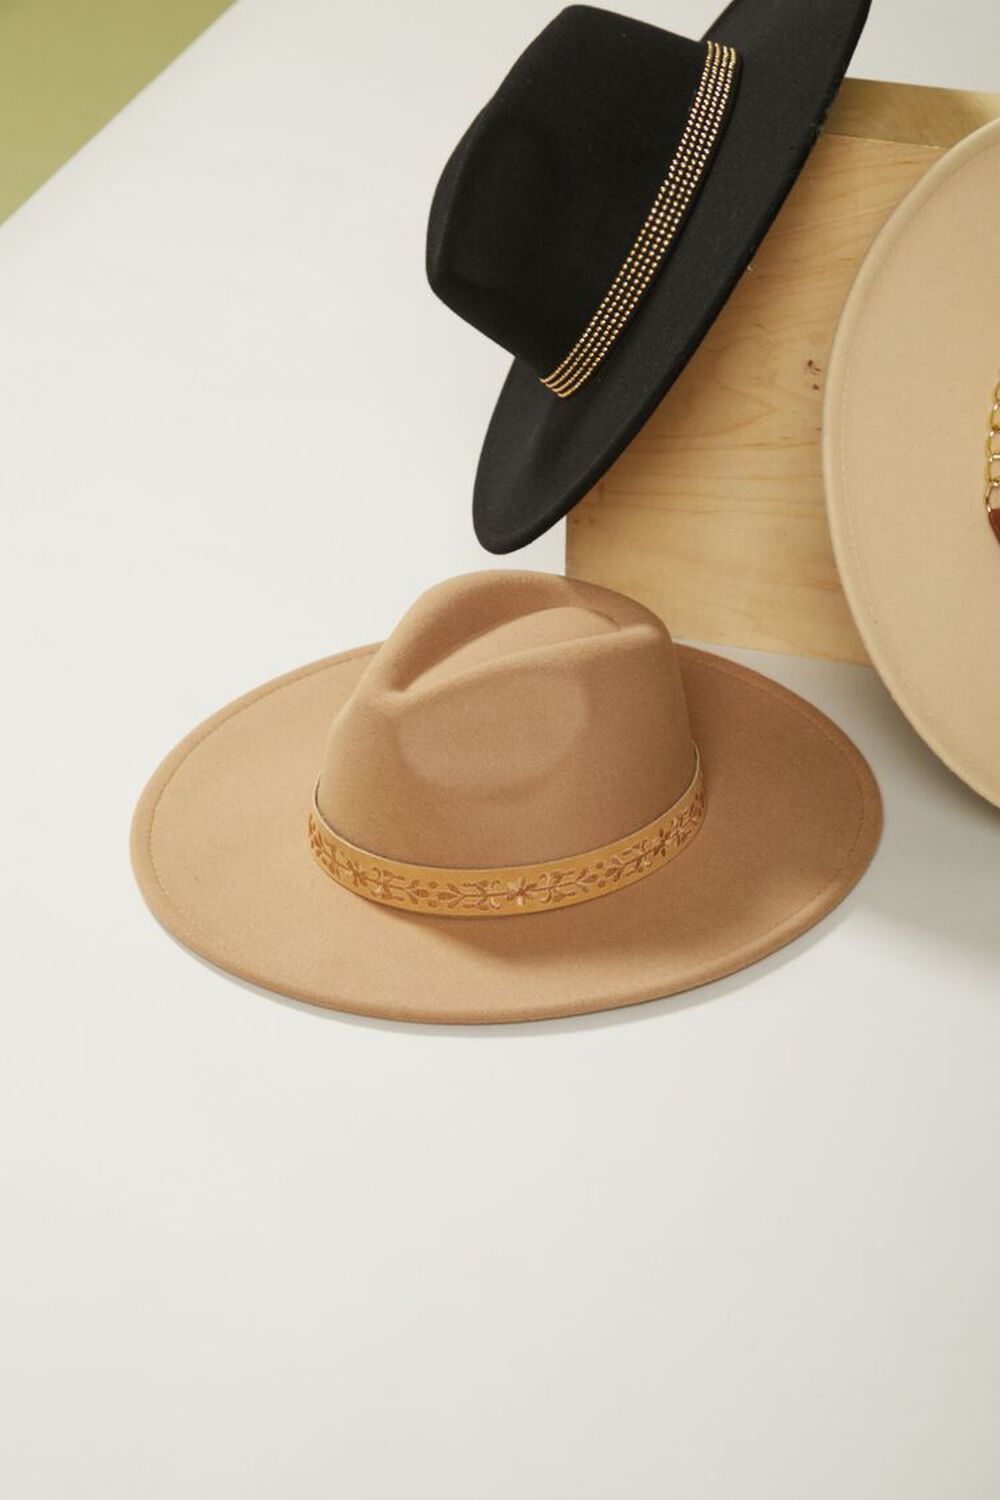 TAN Embroidered Floral-Trim Cowboy Hat, image 1